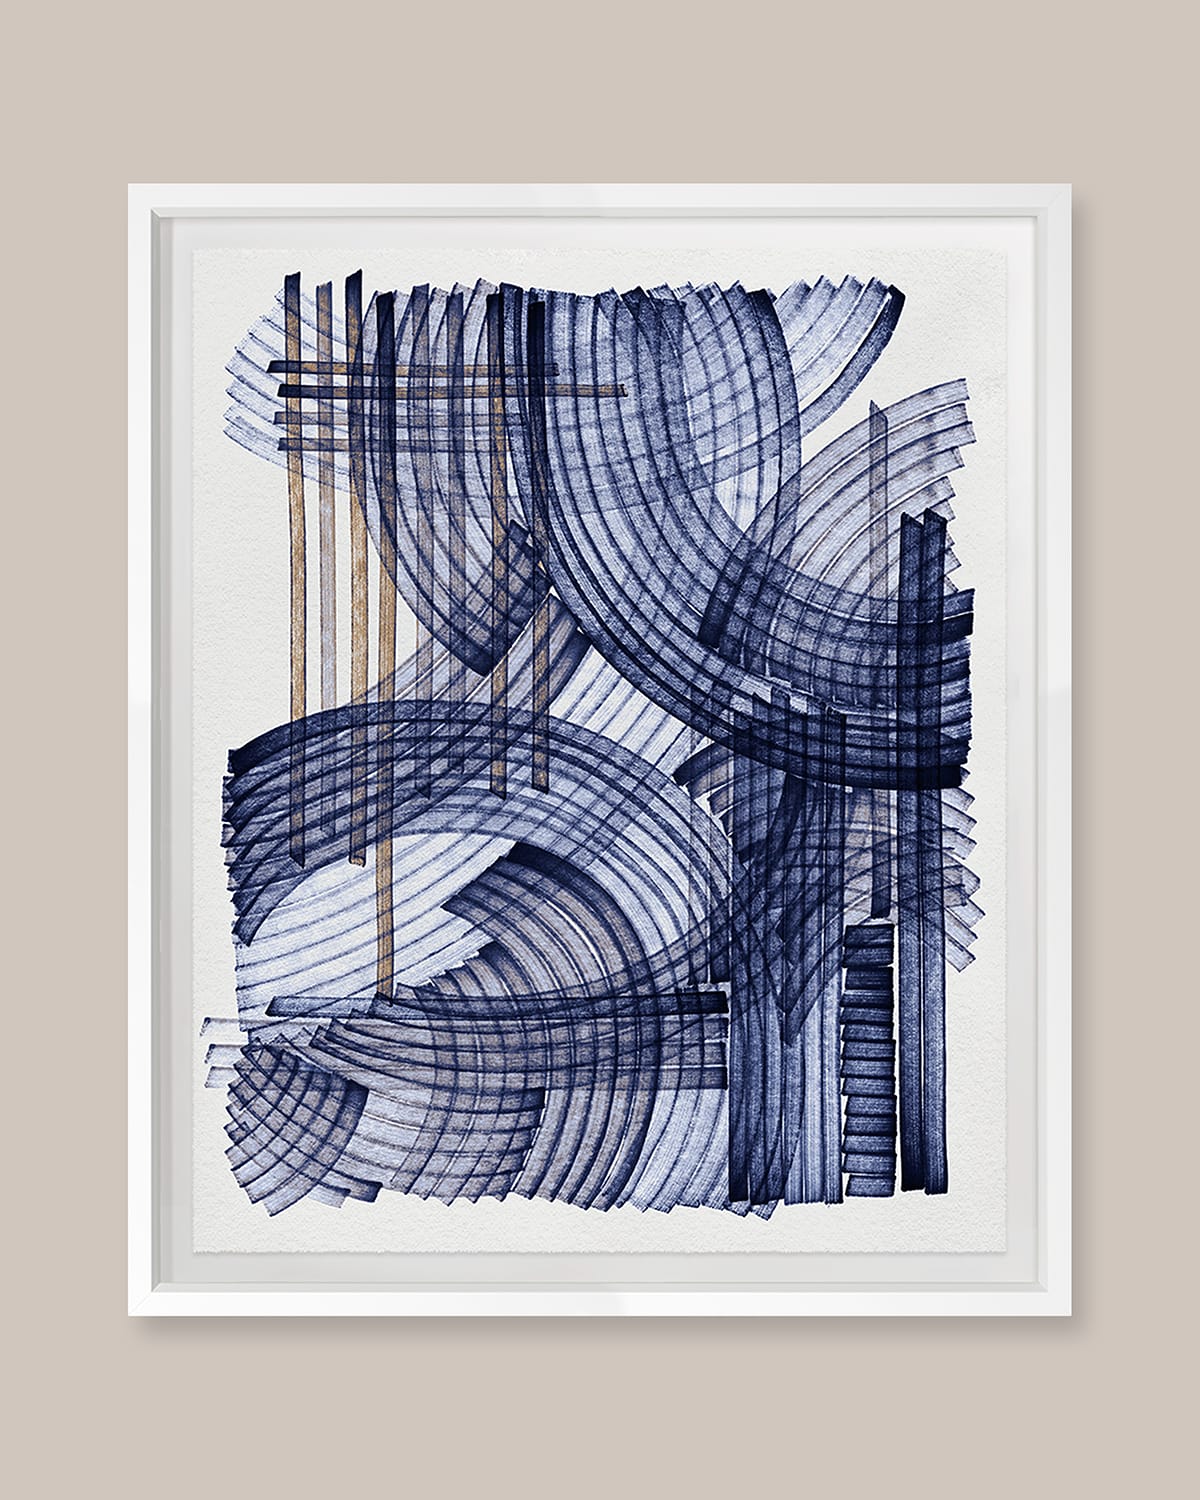 Grand Image Home Blue Weave 2 Digital Art Print By Victoria Neiman